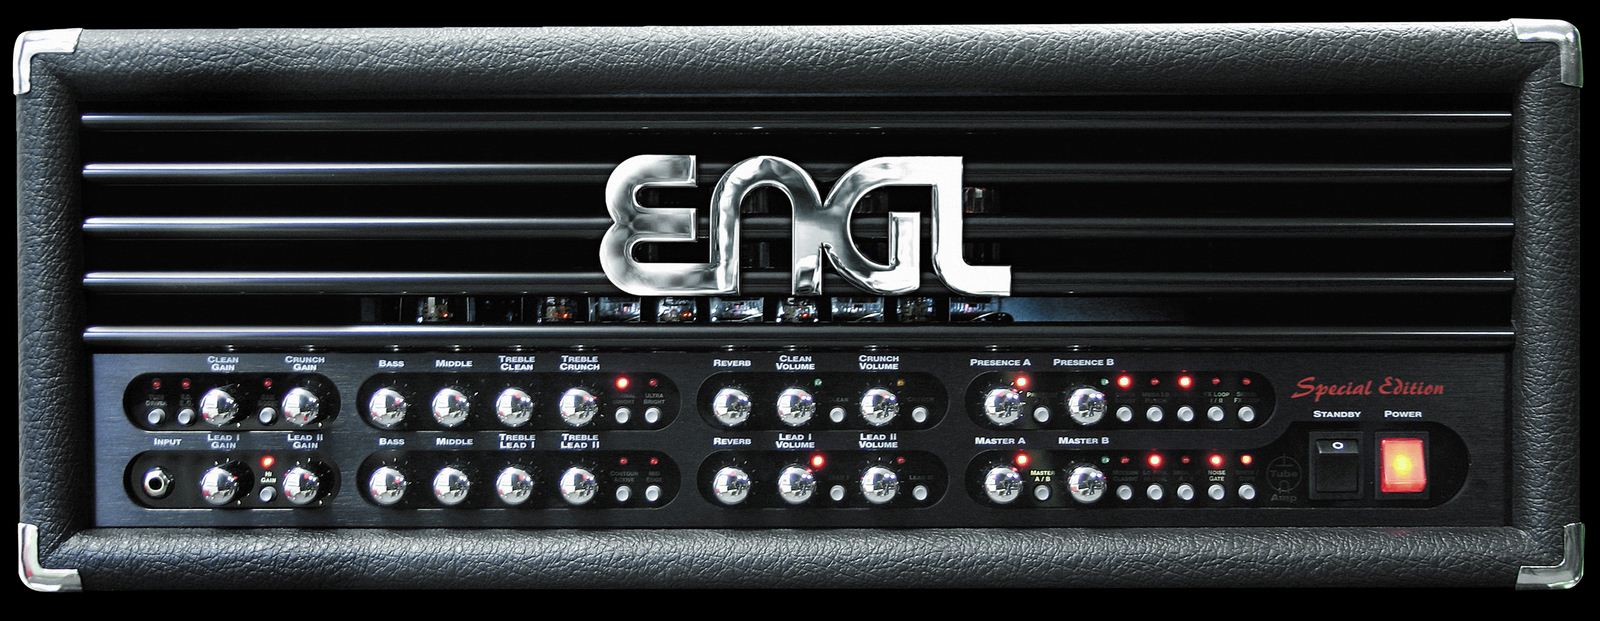 Foto Engl E670 Engl Cabezal Amplificador Especial Edition